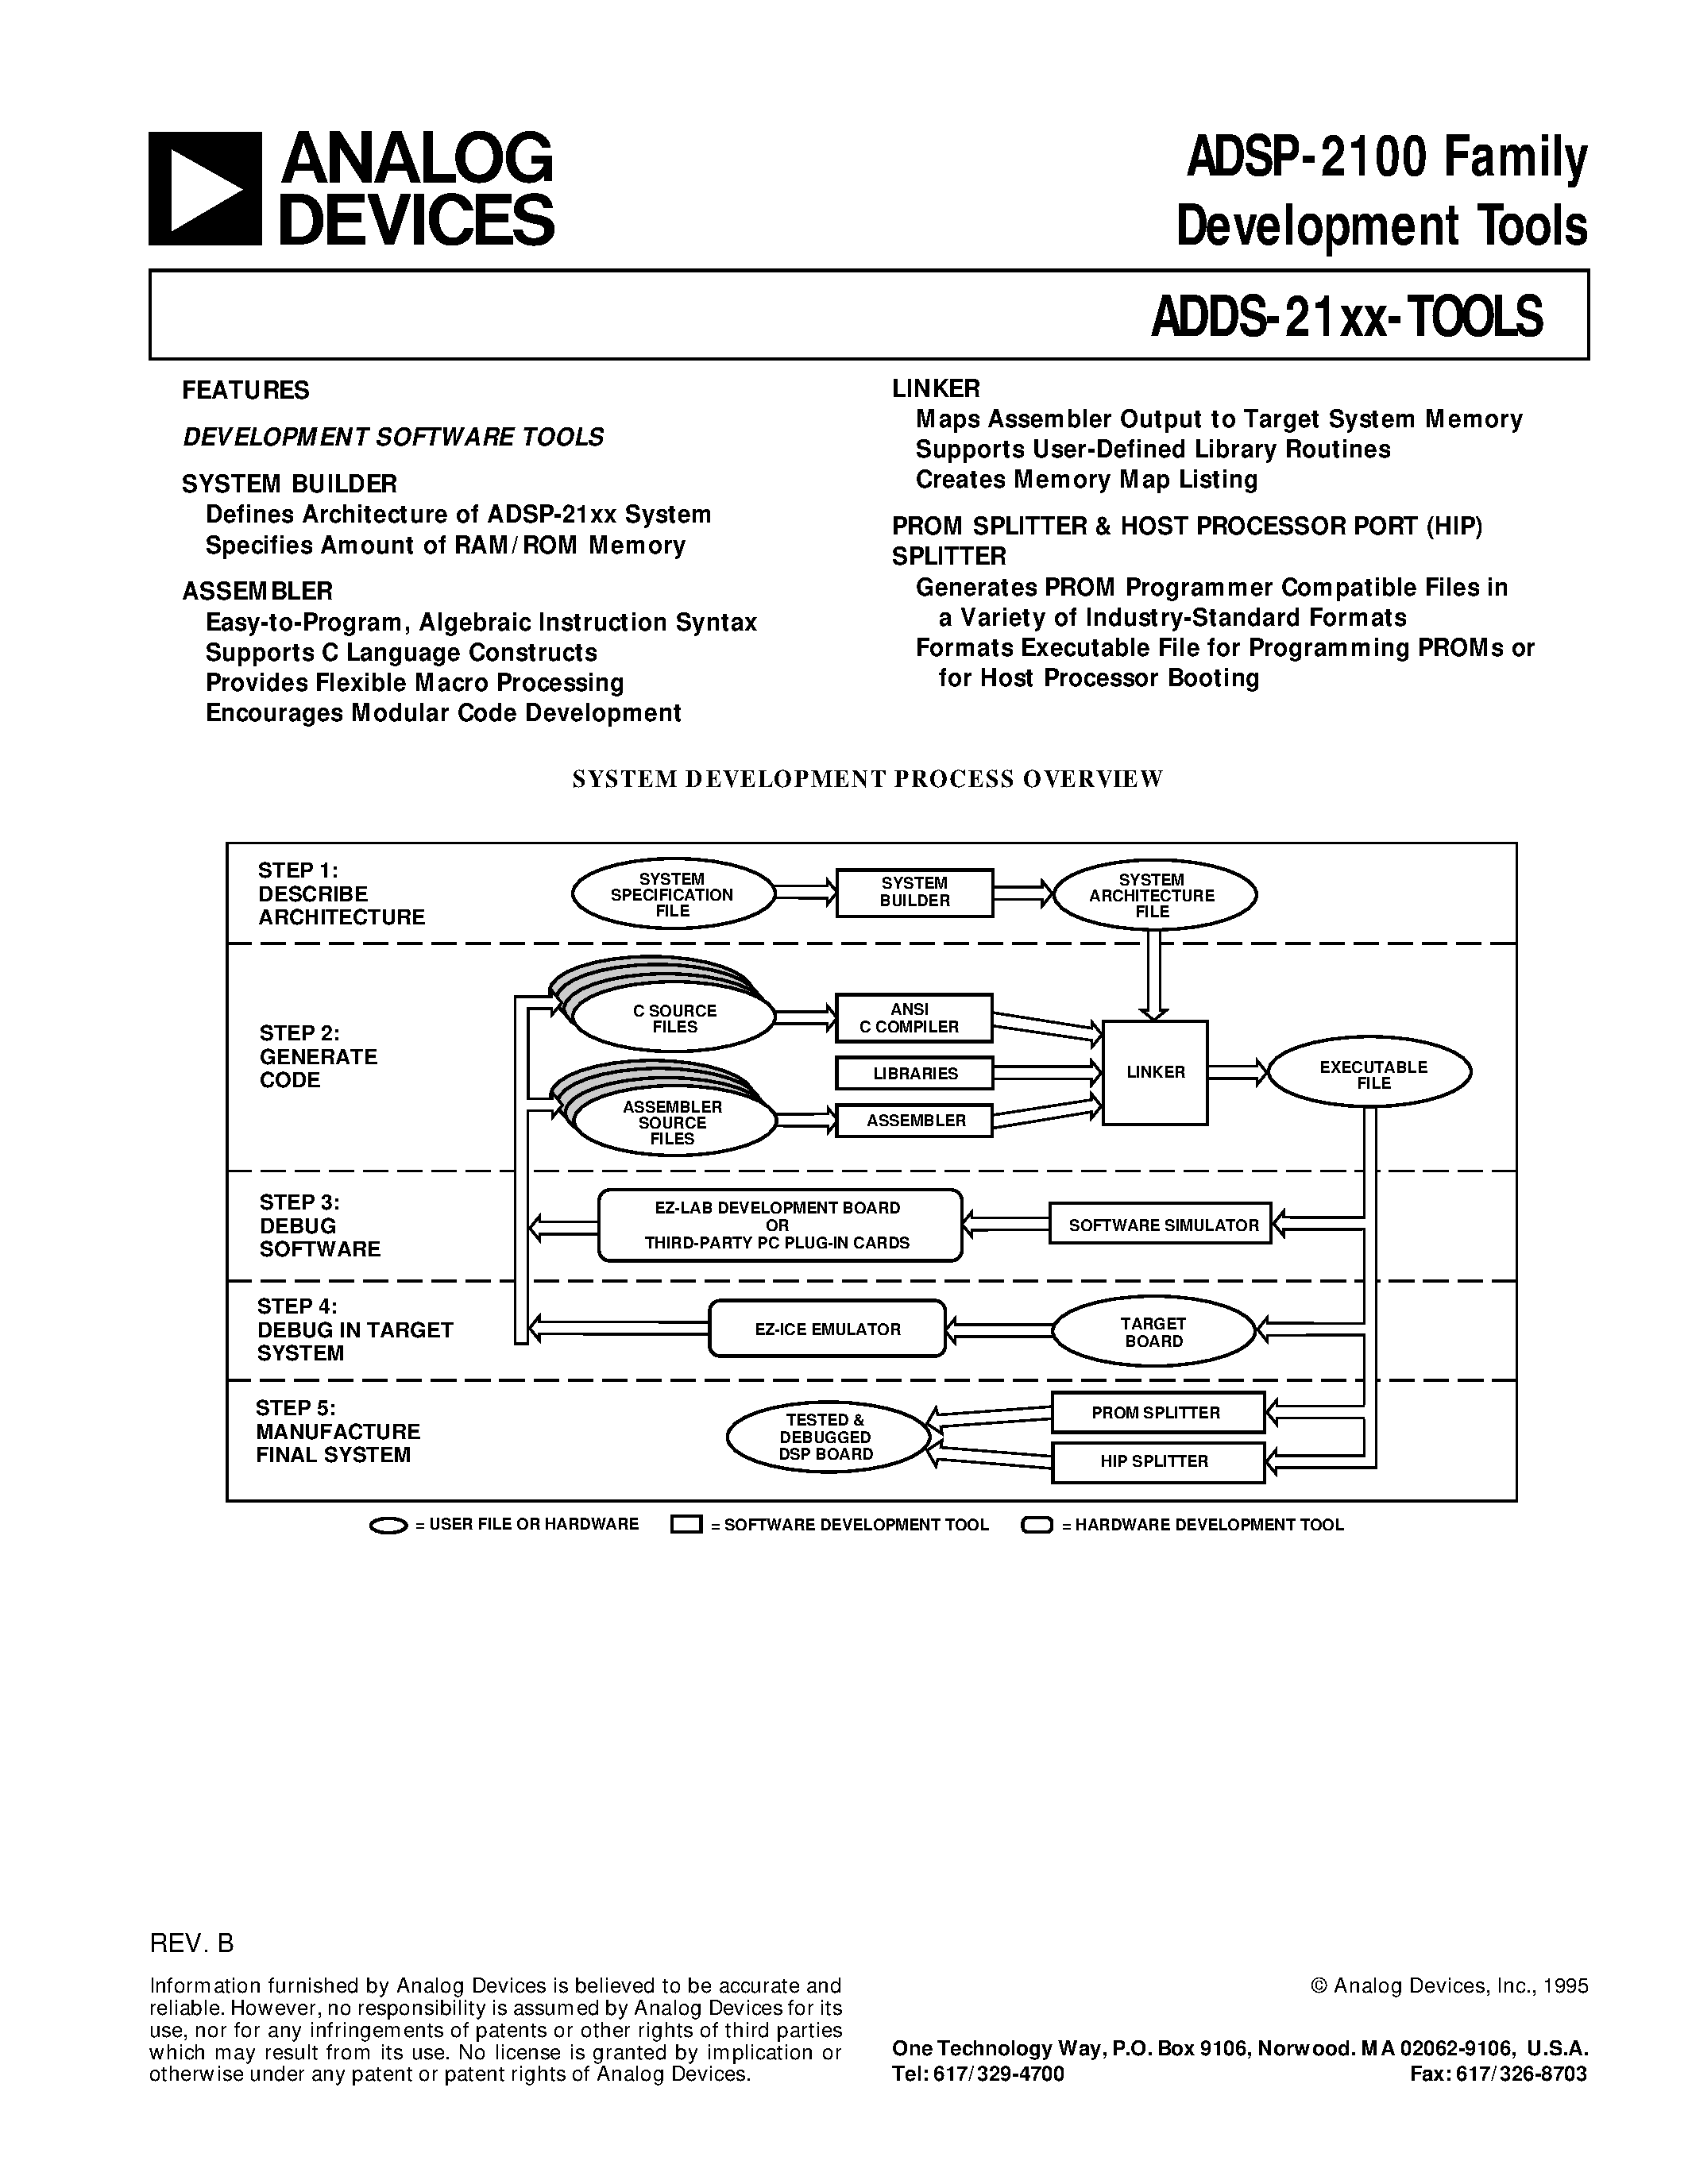 Даташит ADDS-2171-EZ-ICE-P - ADSP-2100 Family Development Tools страница 1